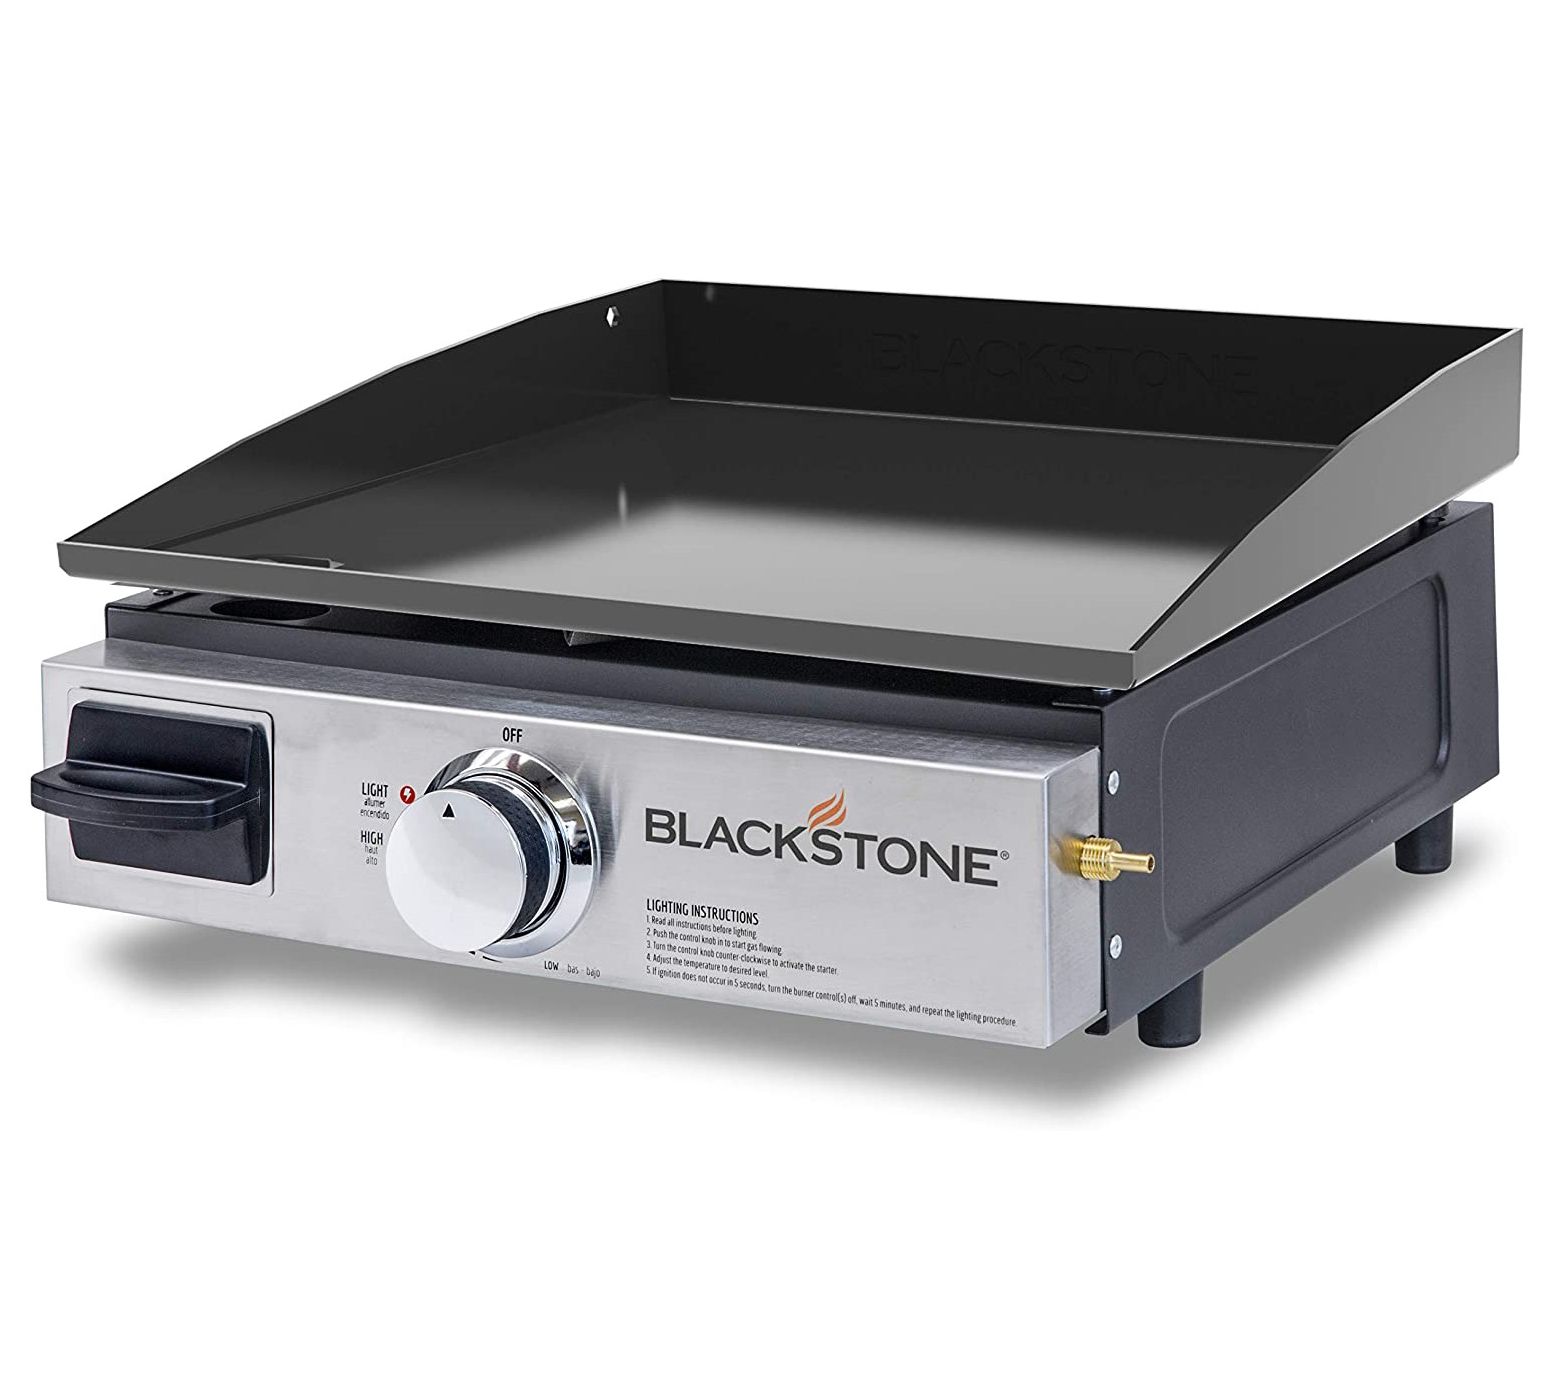 Blackstone 22 in. 2 burner W Steel Nonstick Surface Tabletop Griddle  8023375 - The Home Depot